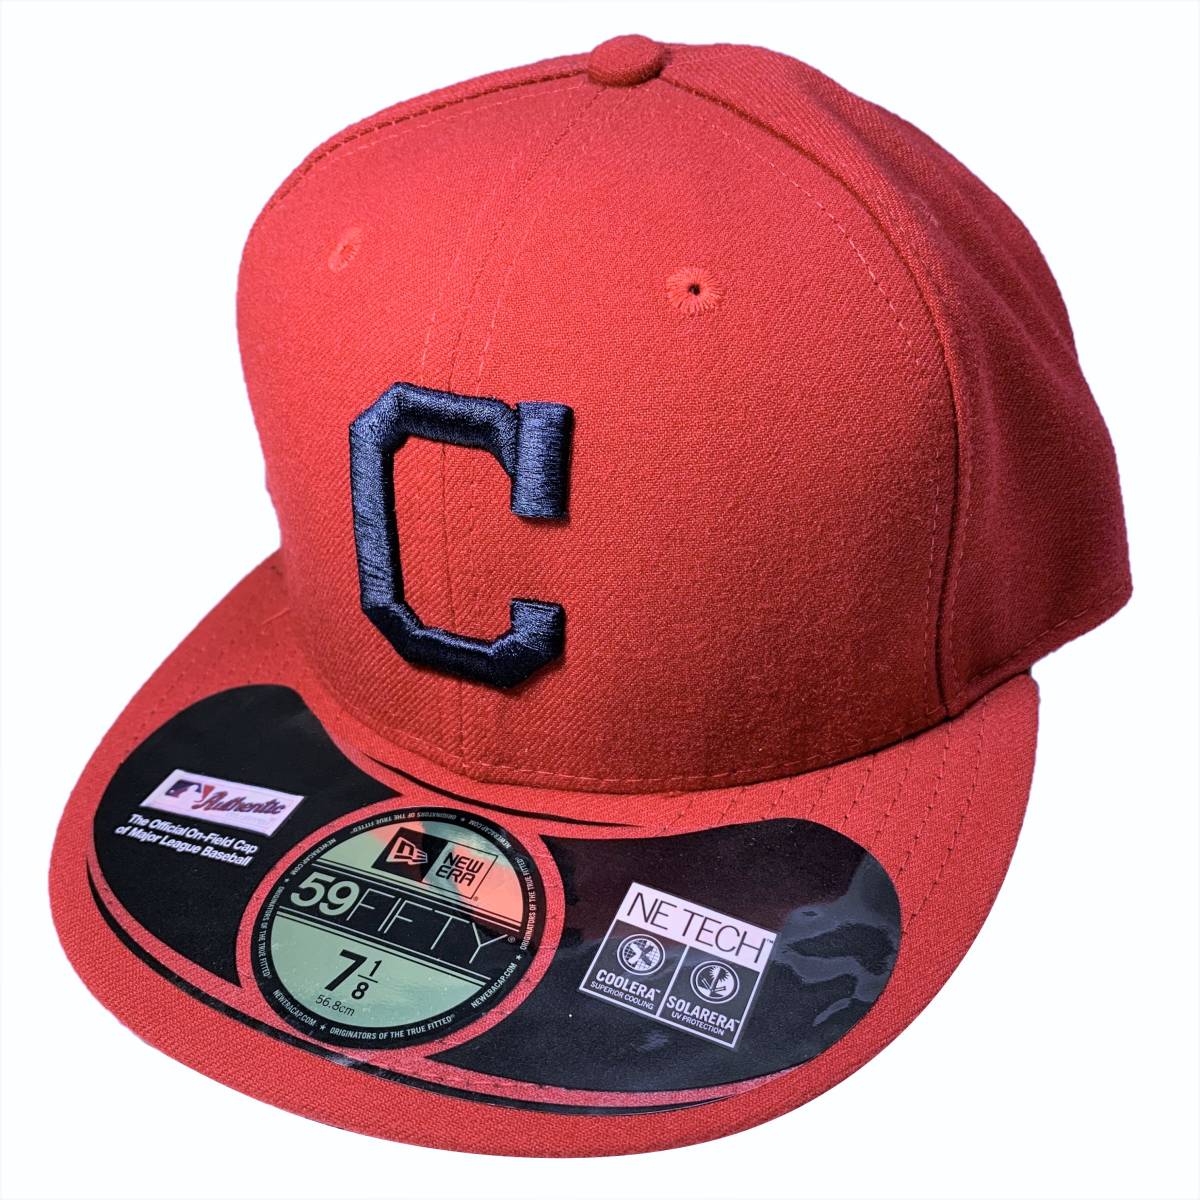 New Era ニューエラ MLB Cleveland Indians クリーブランド インディアンズ ベースボールキャップ（レッド）(7 1/8 56.8cm)【並行輸入品】